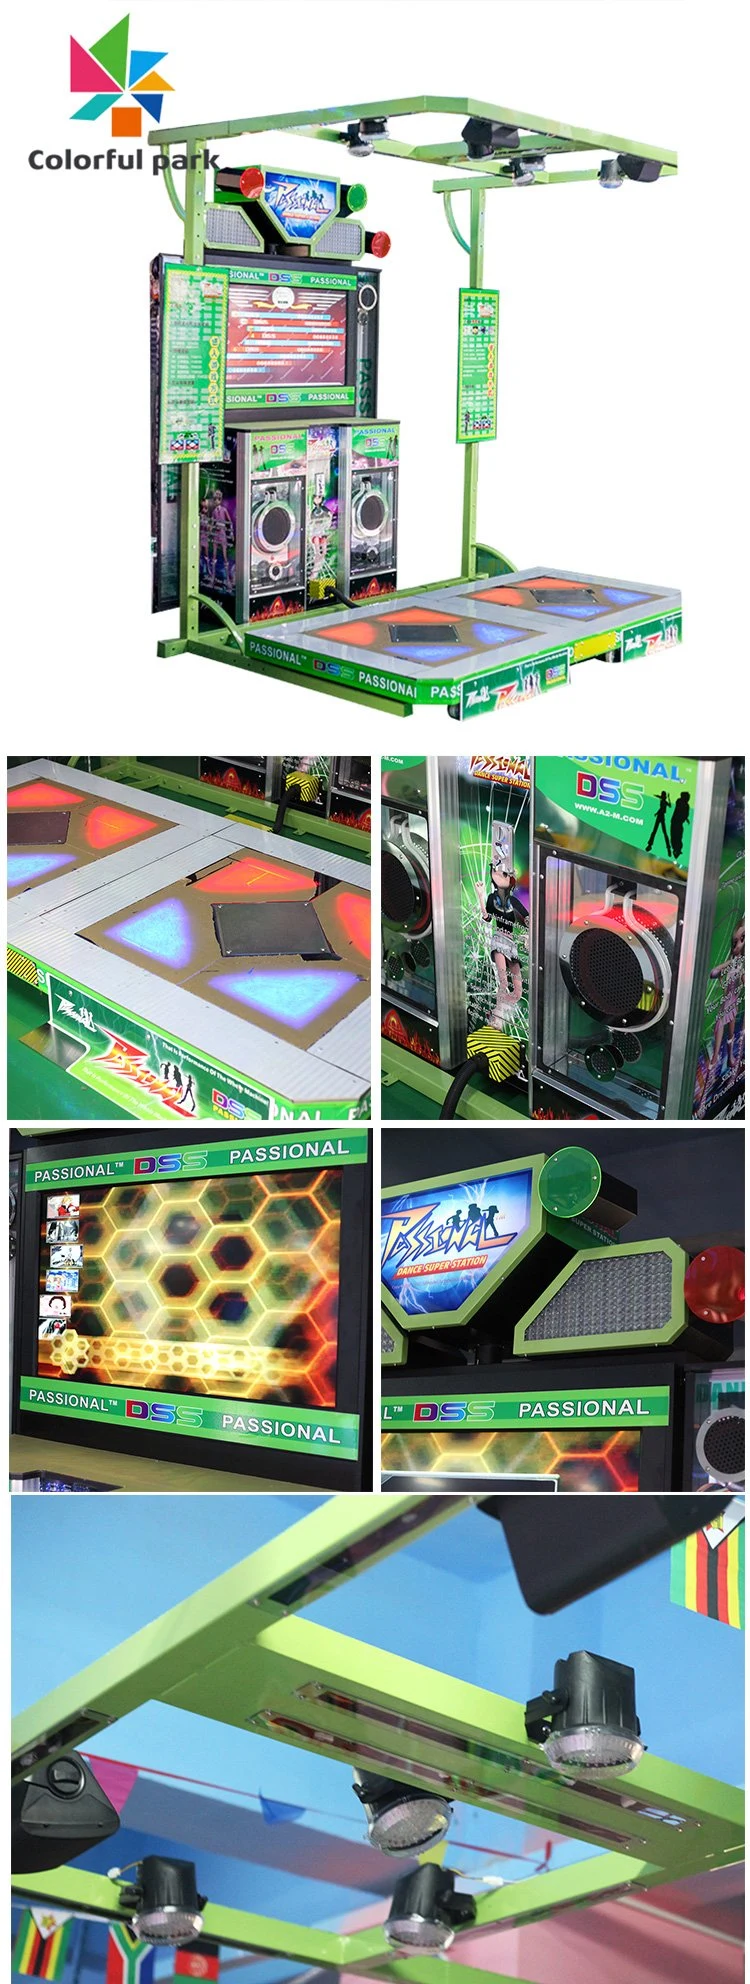 Colorful Park Dance Game Machine Arcade Fish Game Machine Indoor Video Game Pump It up Machine